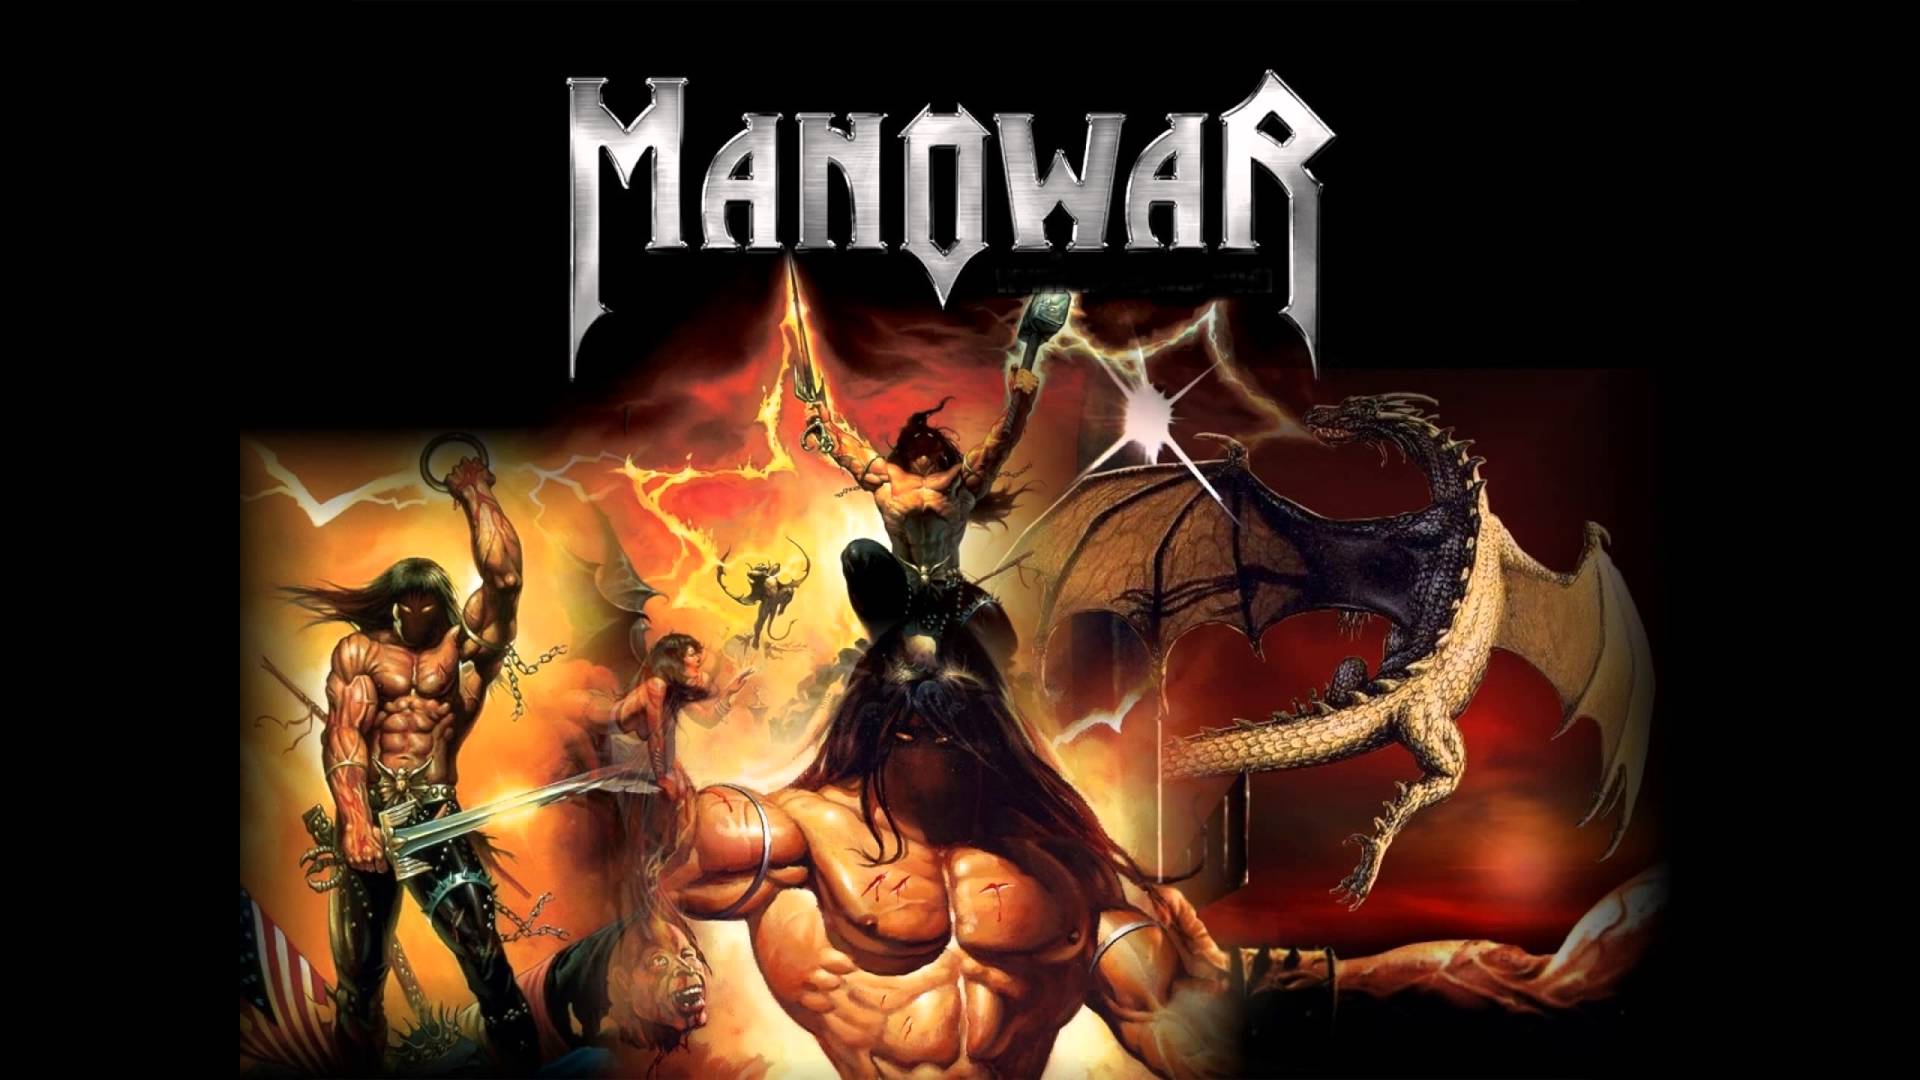 Manowar united warriors. Группа Manowar иллюстрации. Мановар постеры. Manowar 2002. Мановар обложки.